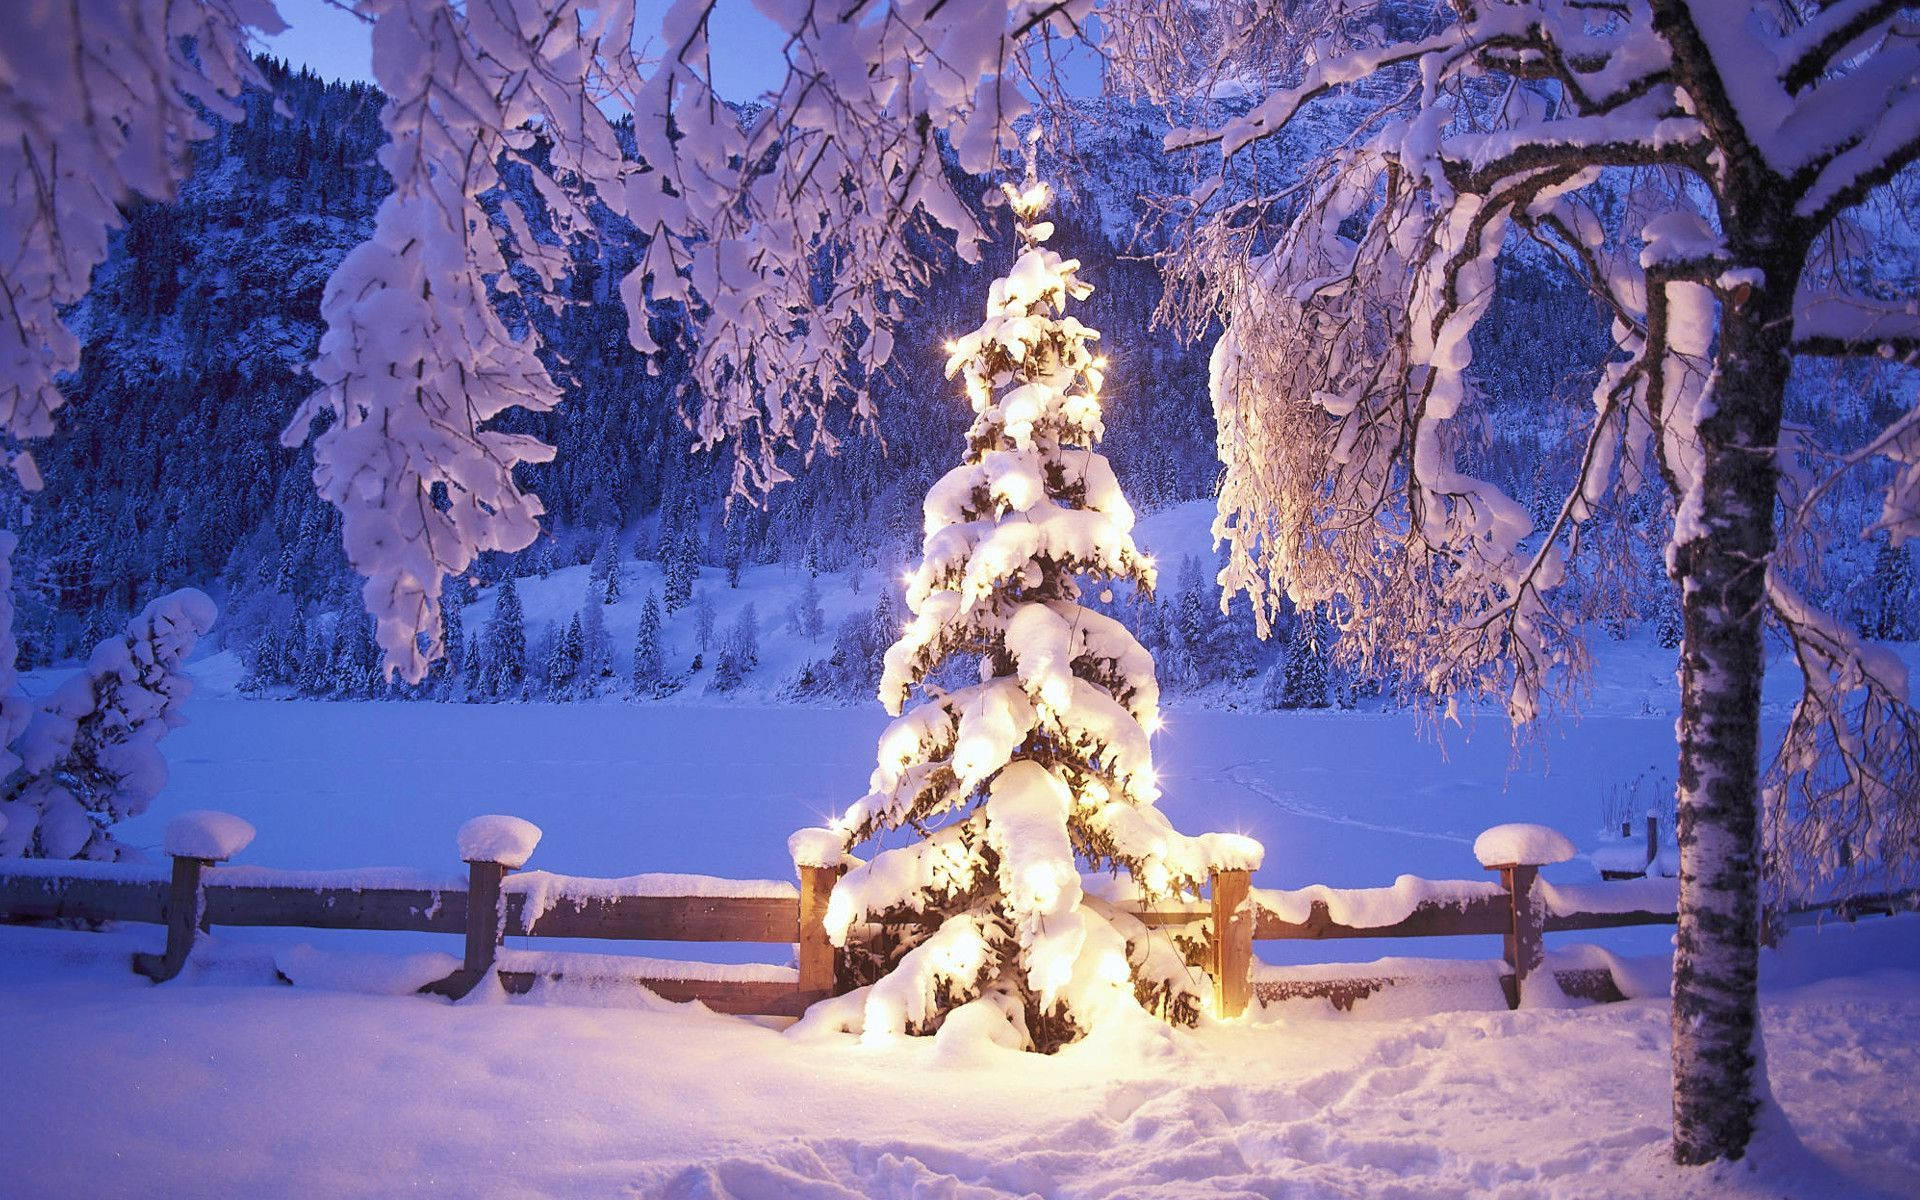 En fredfyldt vinter underverden i en jule skov. Wallpaper